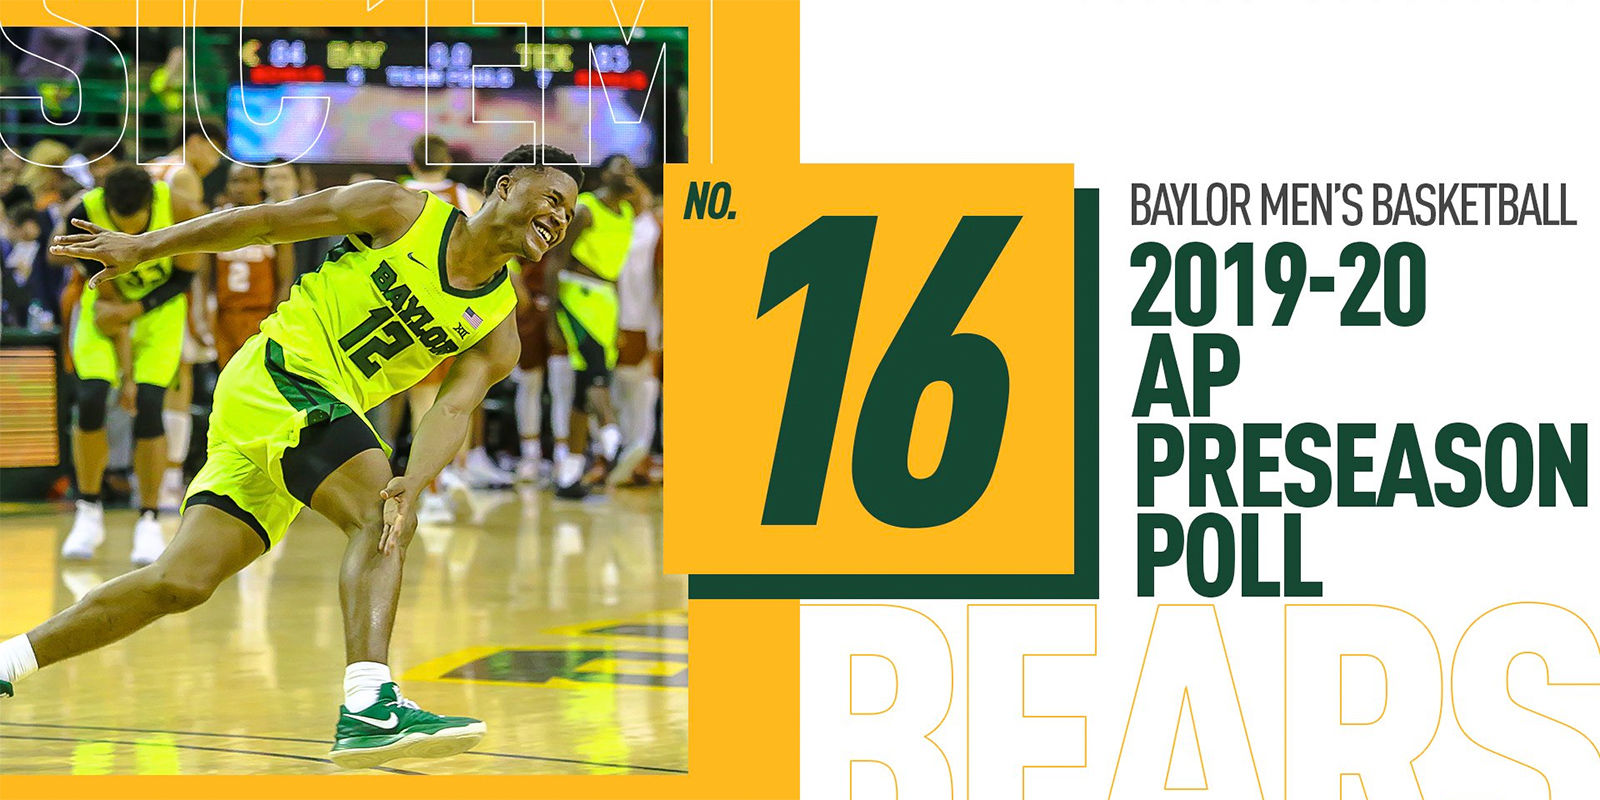 Baylor men's basketball ranked 16th in preseason AP poll